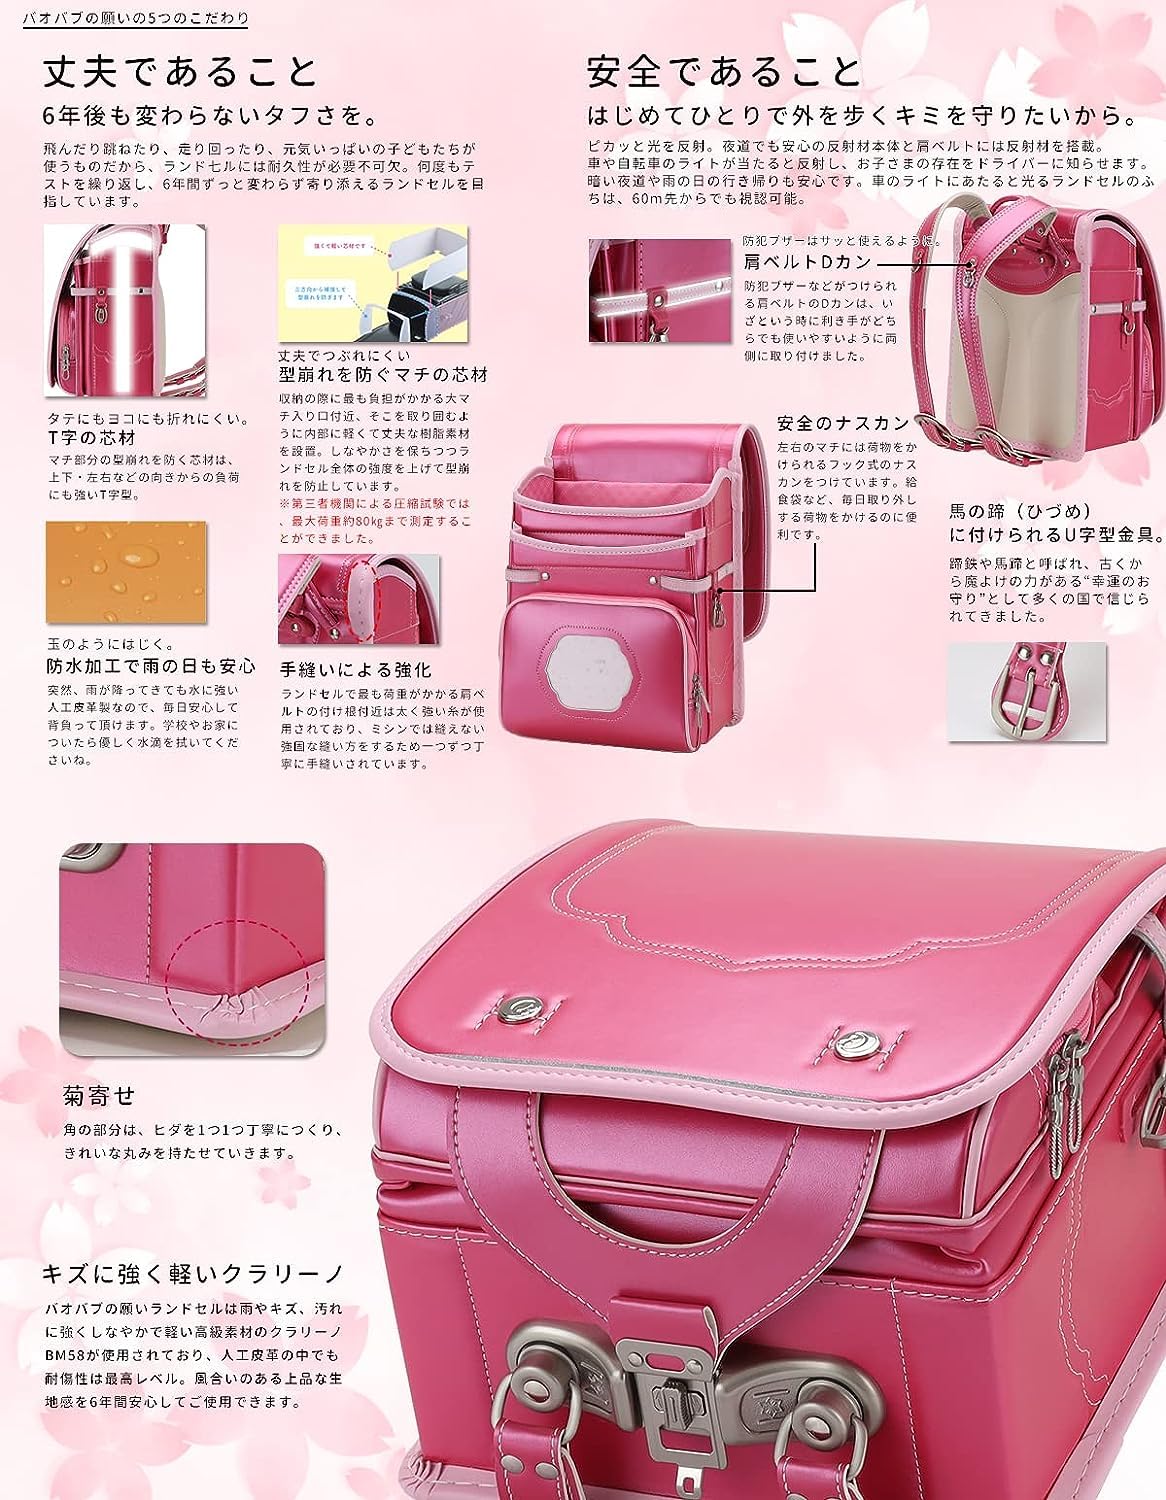 Baobab's wish Ransel Randoseru Backpack Semi-automatic satchel Japanese school bag for girls and boys PU leather bab-rng58 (Rose)